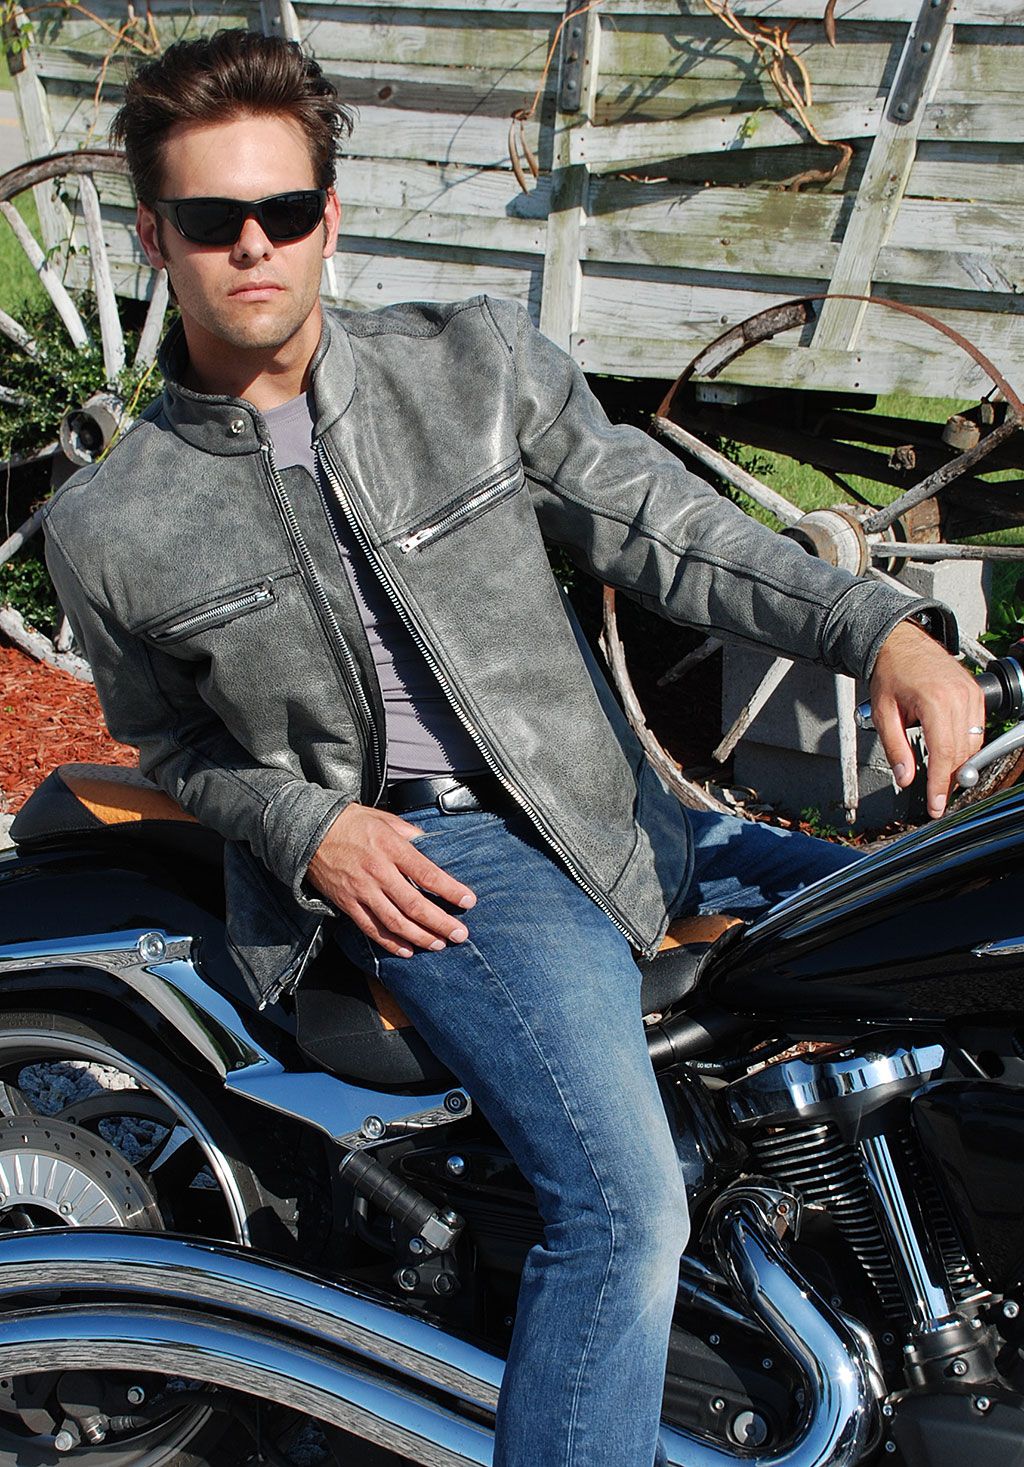  Biker wearing a leather jacket on motorcycle